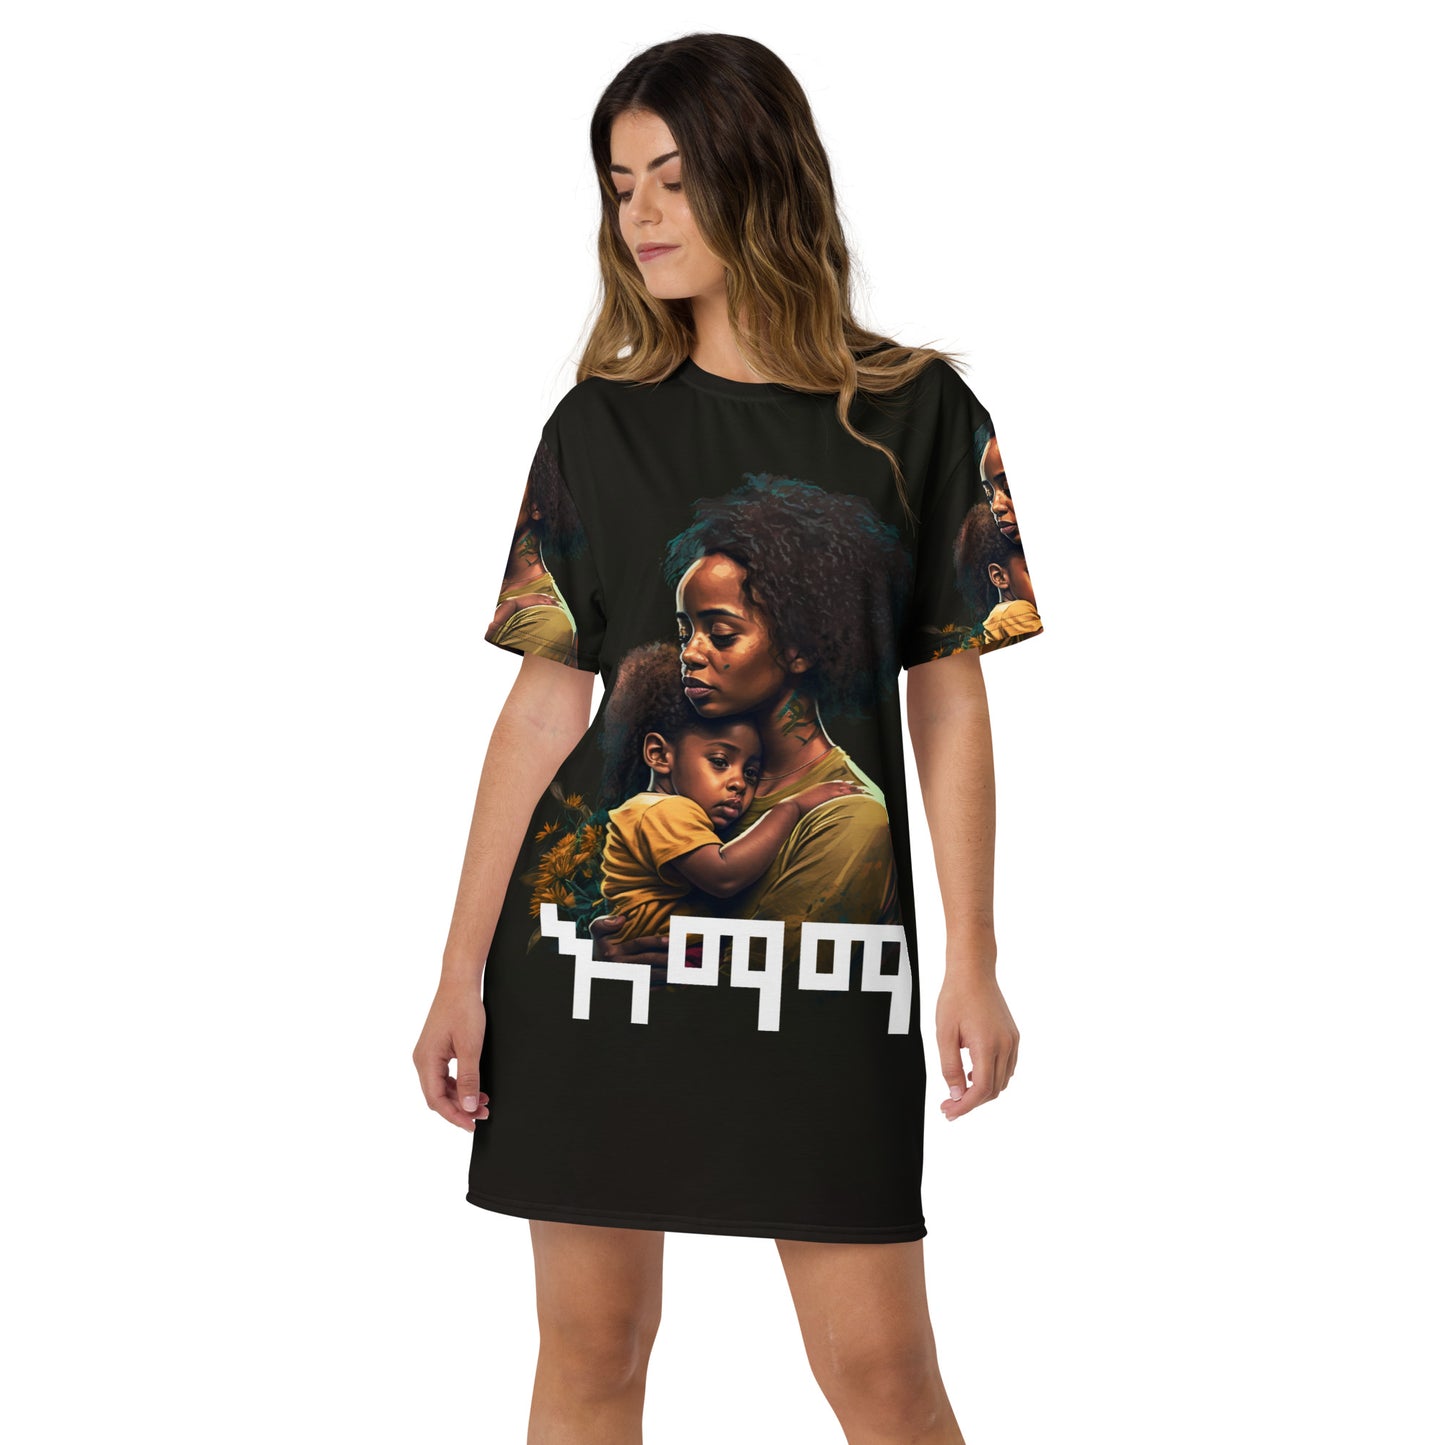 Mama  እማማ - T-shirt dress